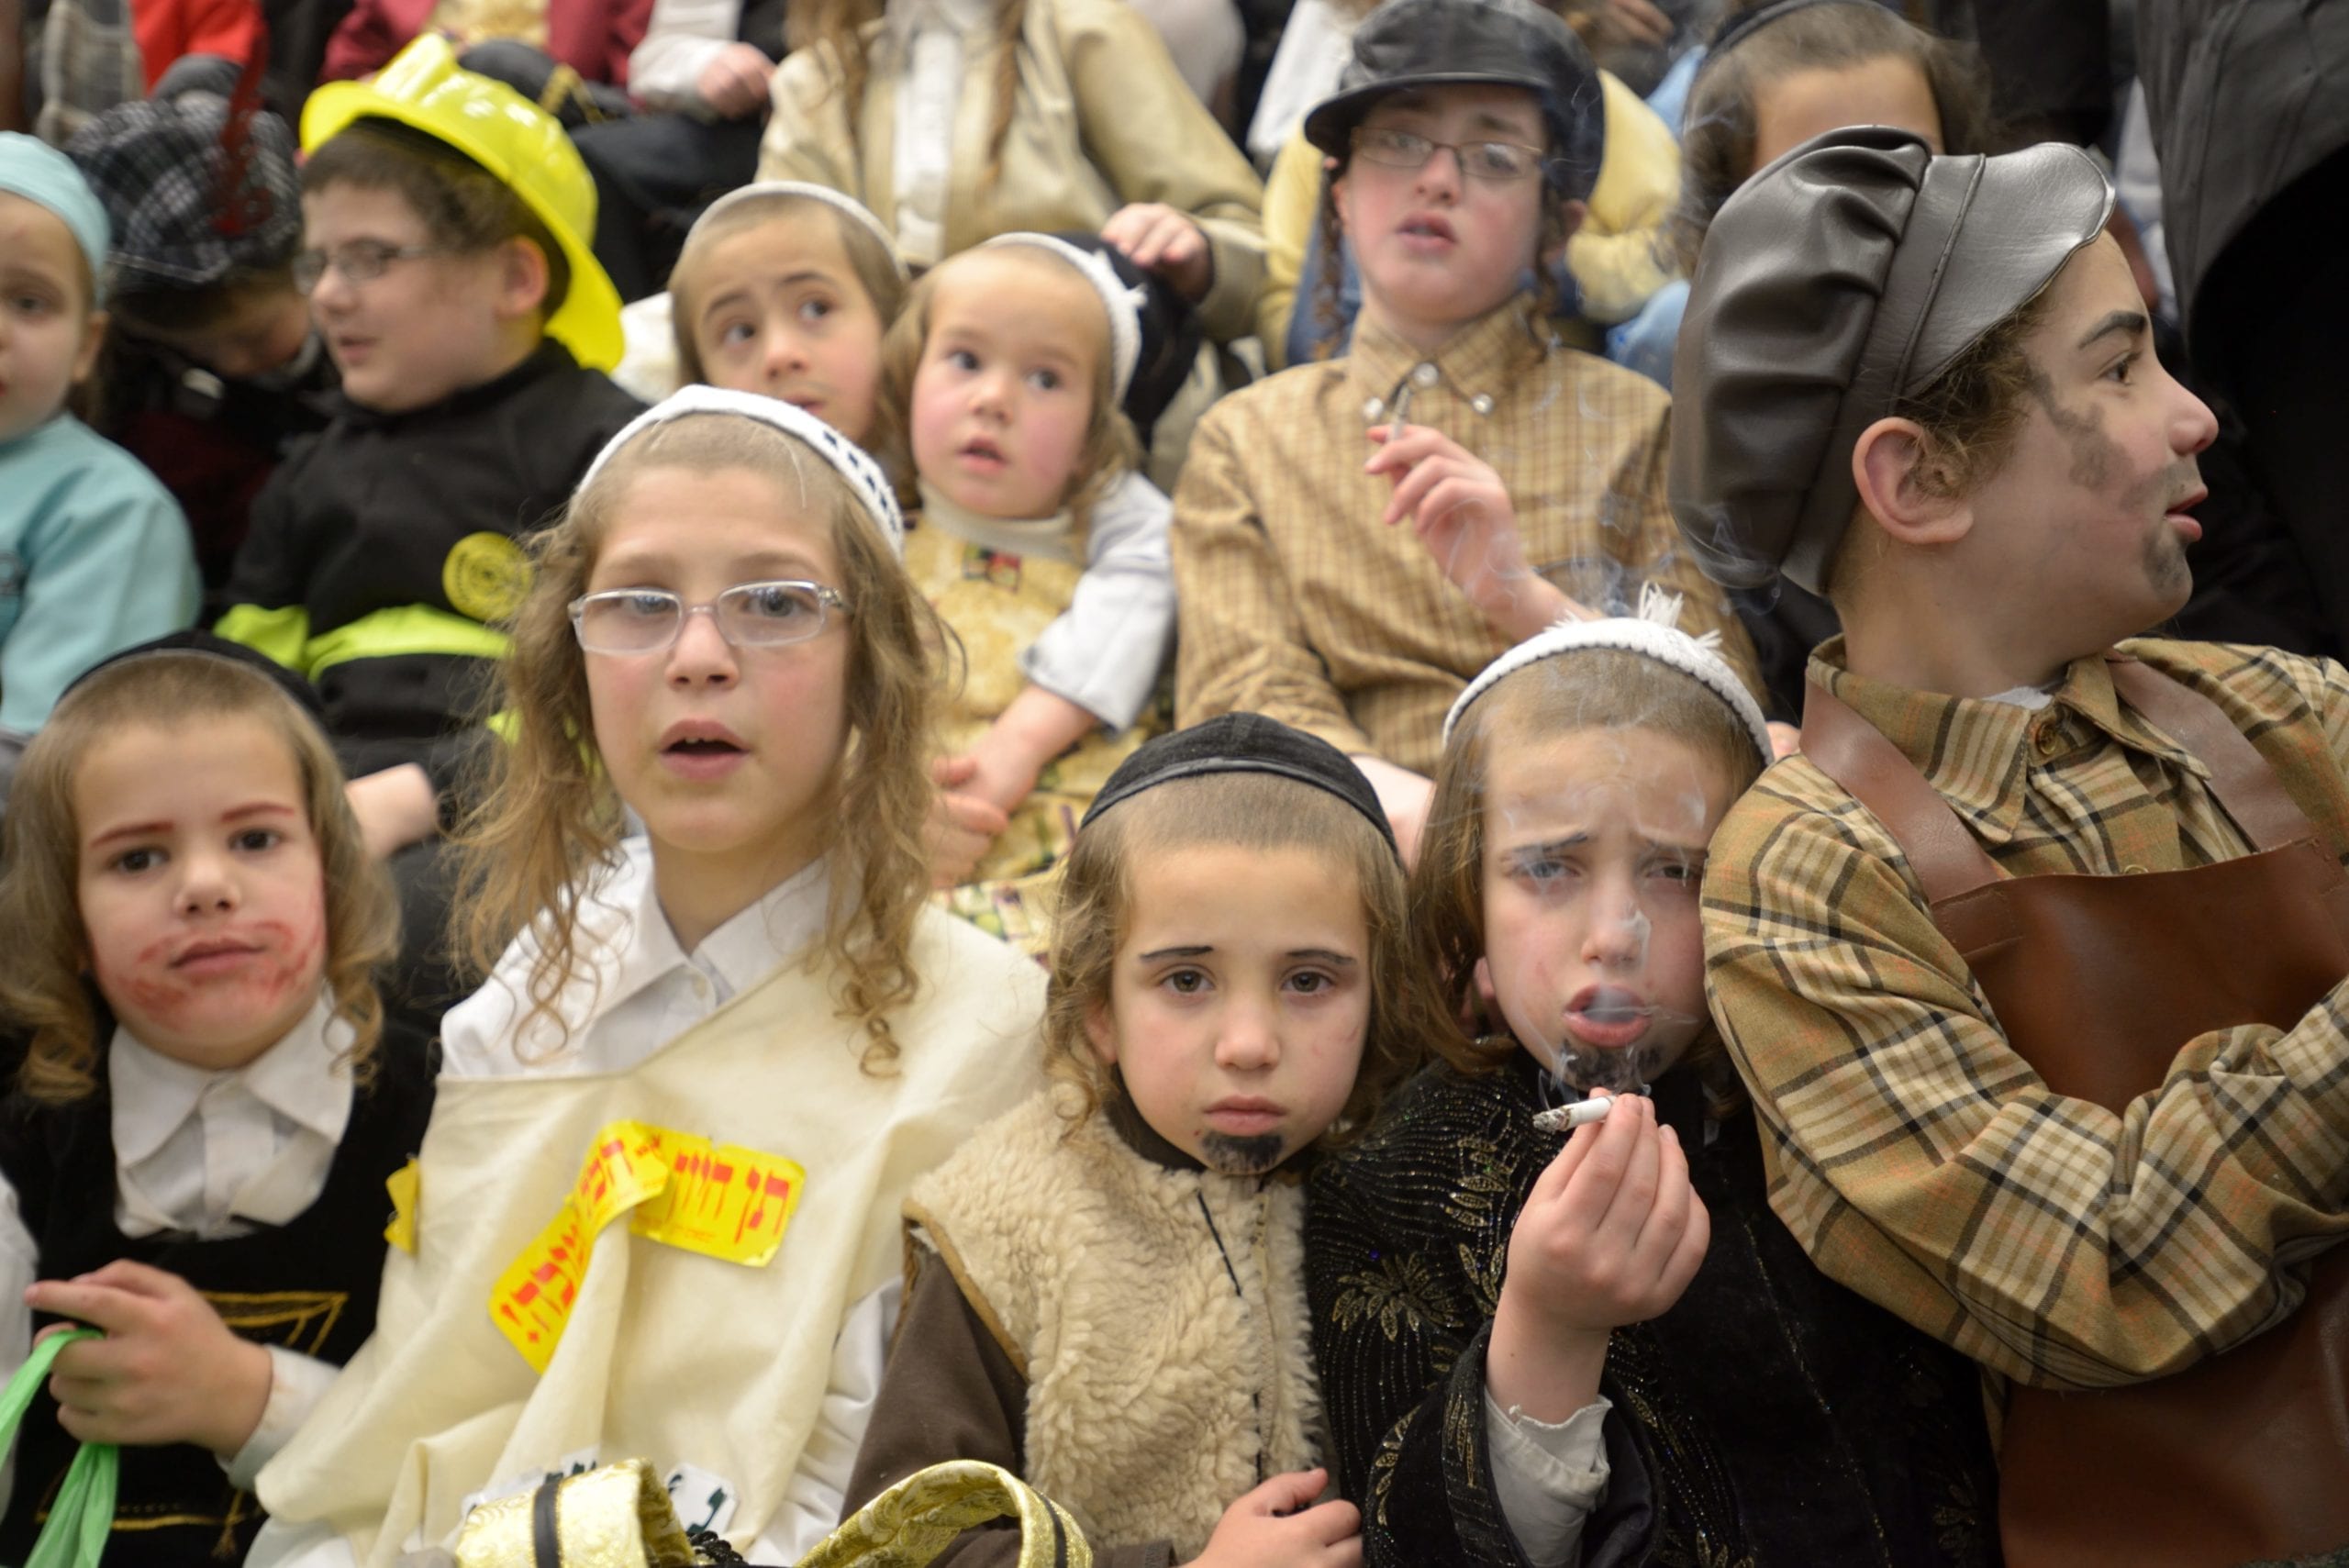 Gili Yaari photographs the Purim celebration in UltraOrthodox